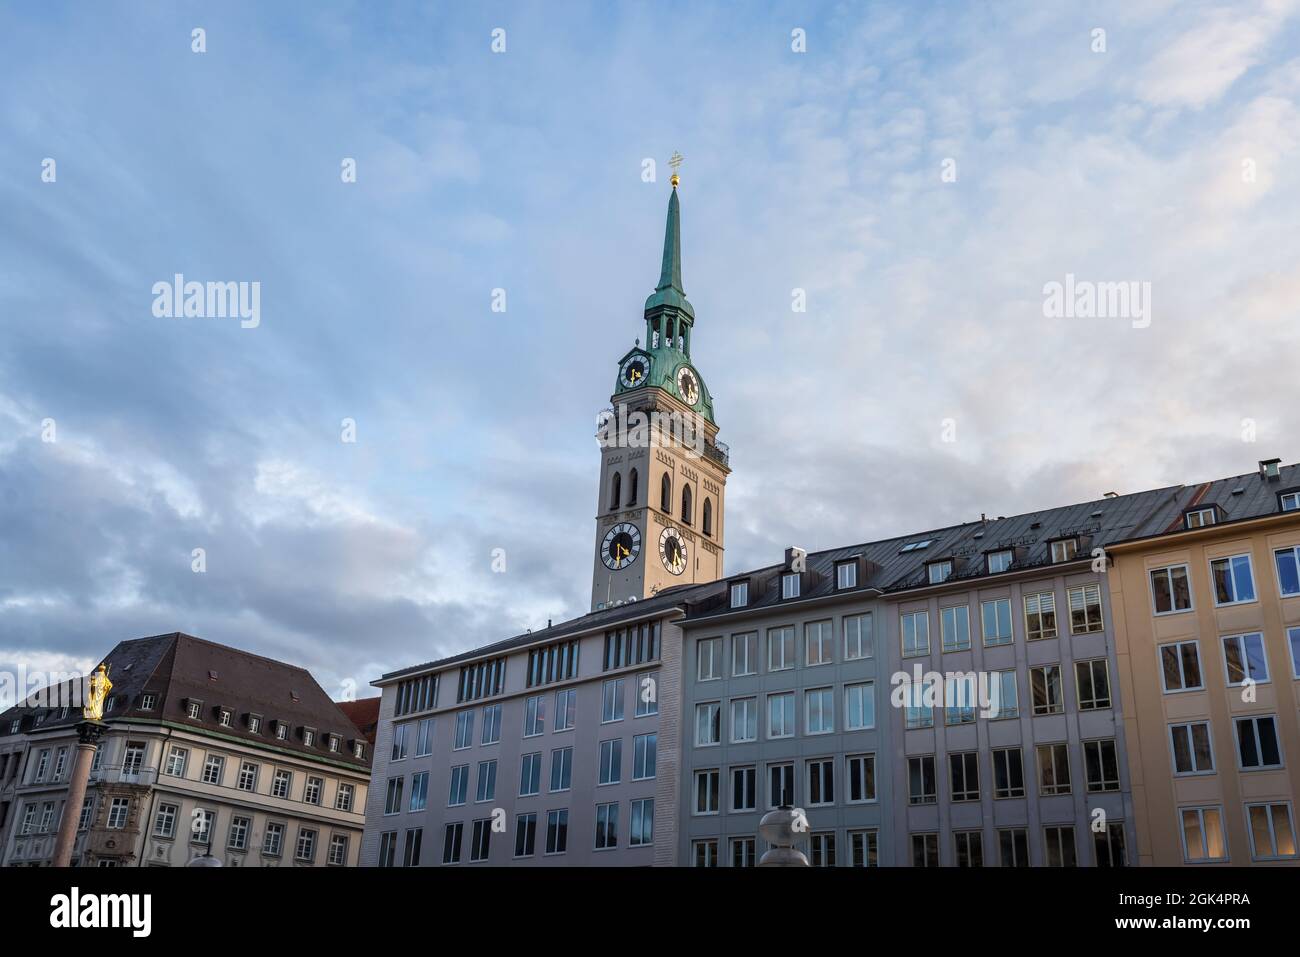 St. Peter's Church Tower - Munich, Bavaria, Germany Stock Photo